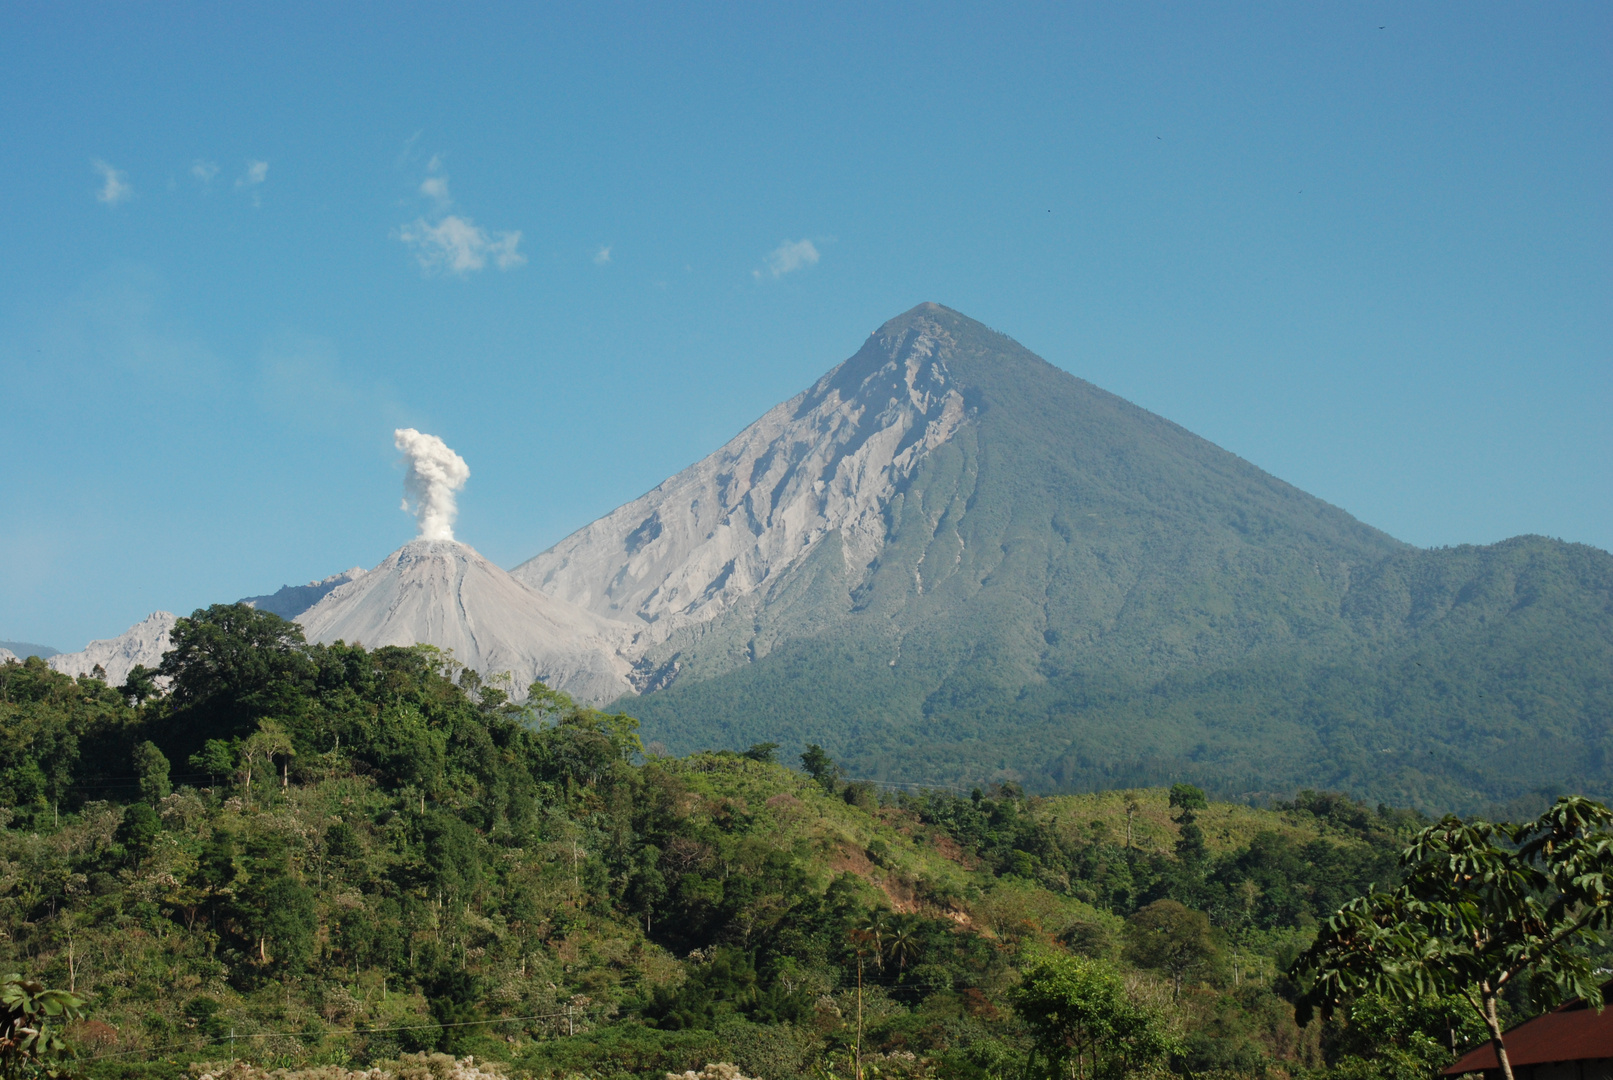 Der Vulkan Santa Maria 3772m und der Domvulkan Santiaguito